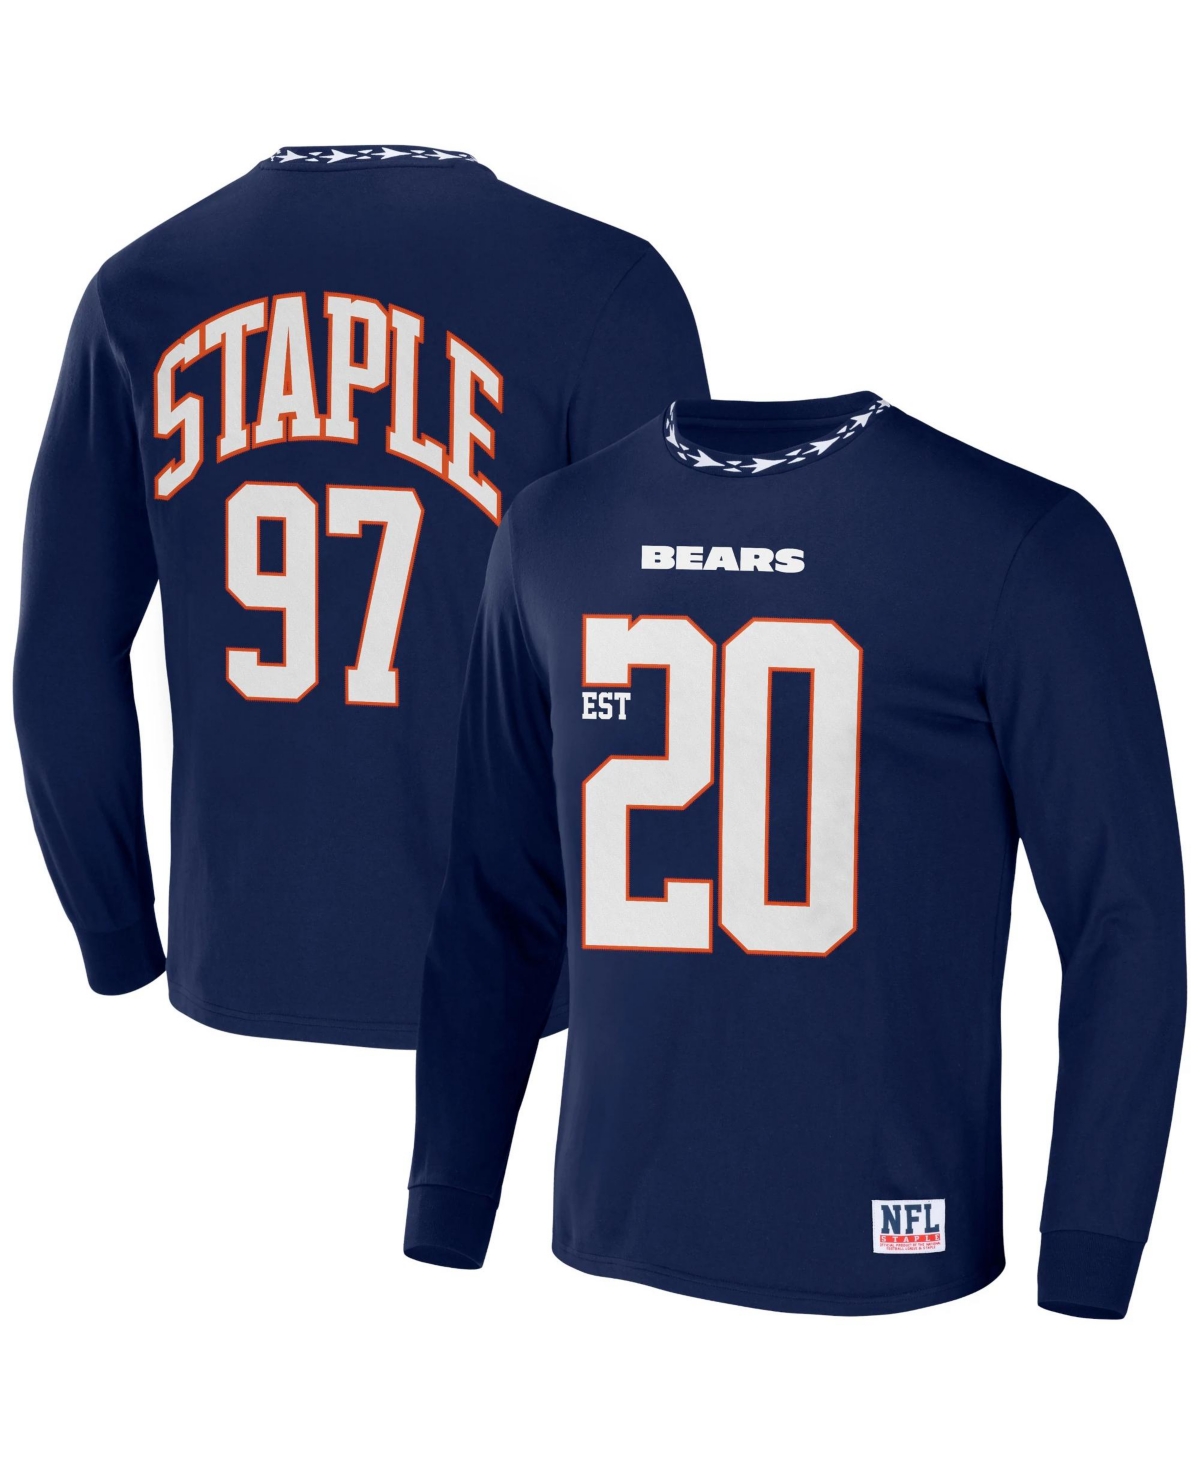 Shop Nfl Properties Men's Nfl X Staple Navy Chicago Bears Core Long Sleeve Jersey Style T-shirt